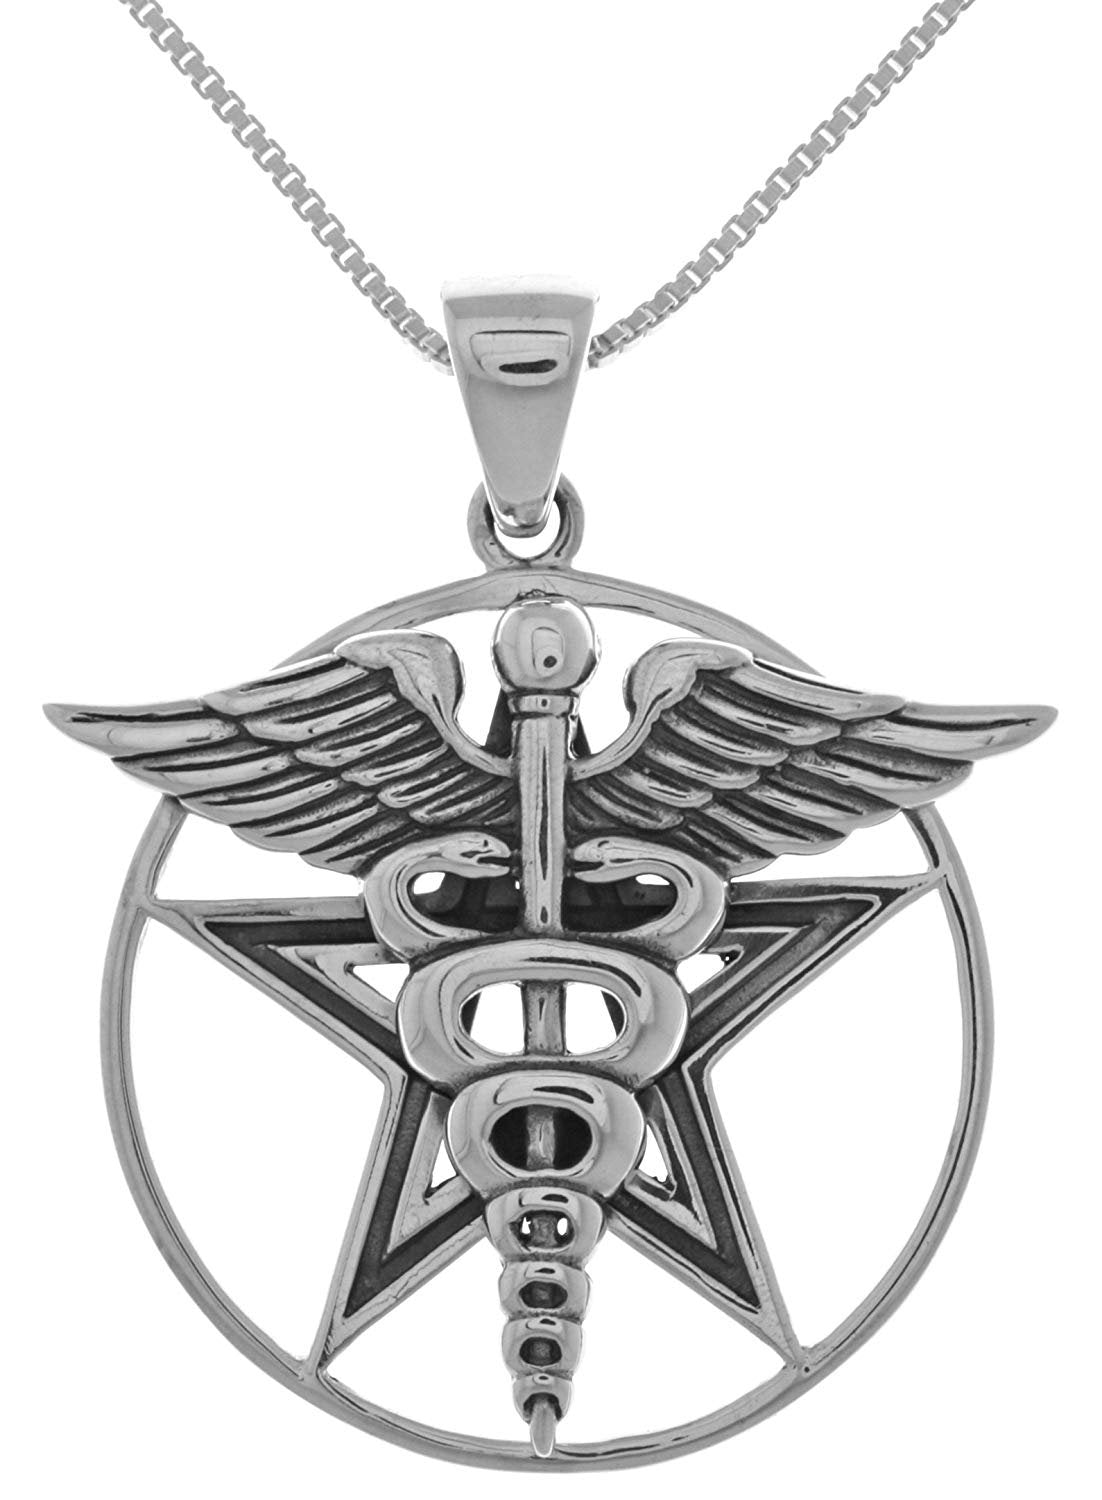 Jewelry Trends Caduceus Star Pentagram Pentacle Sterling Silver Pendant Necklace 18"